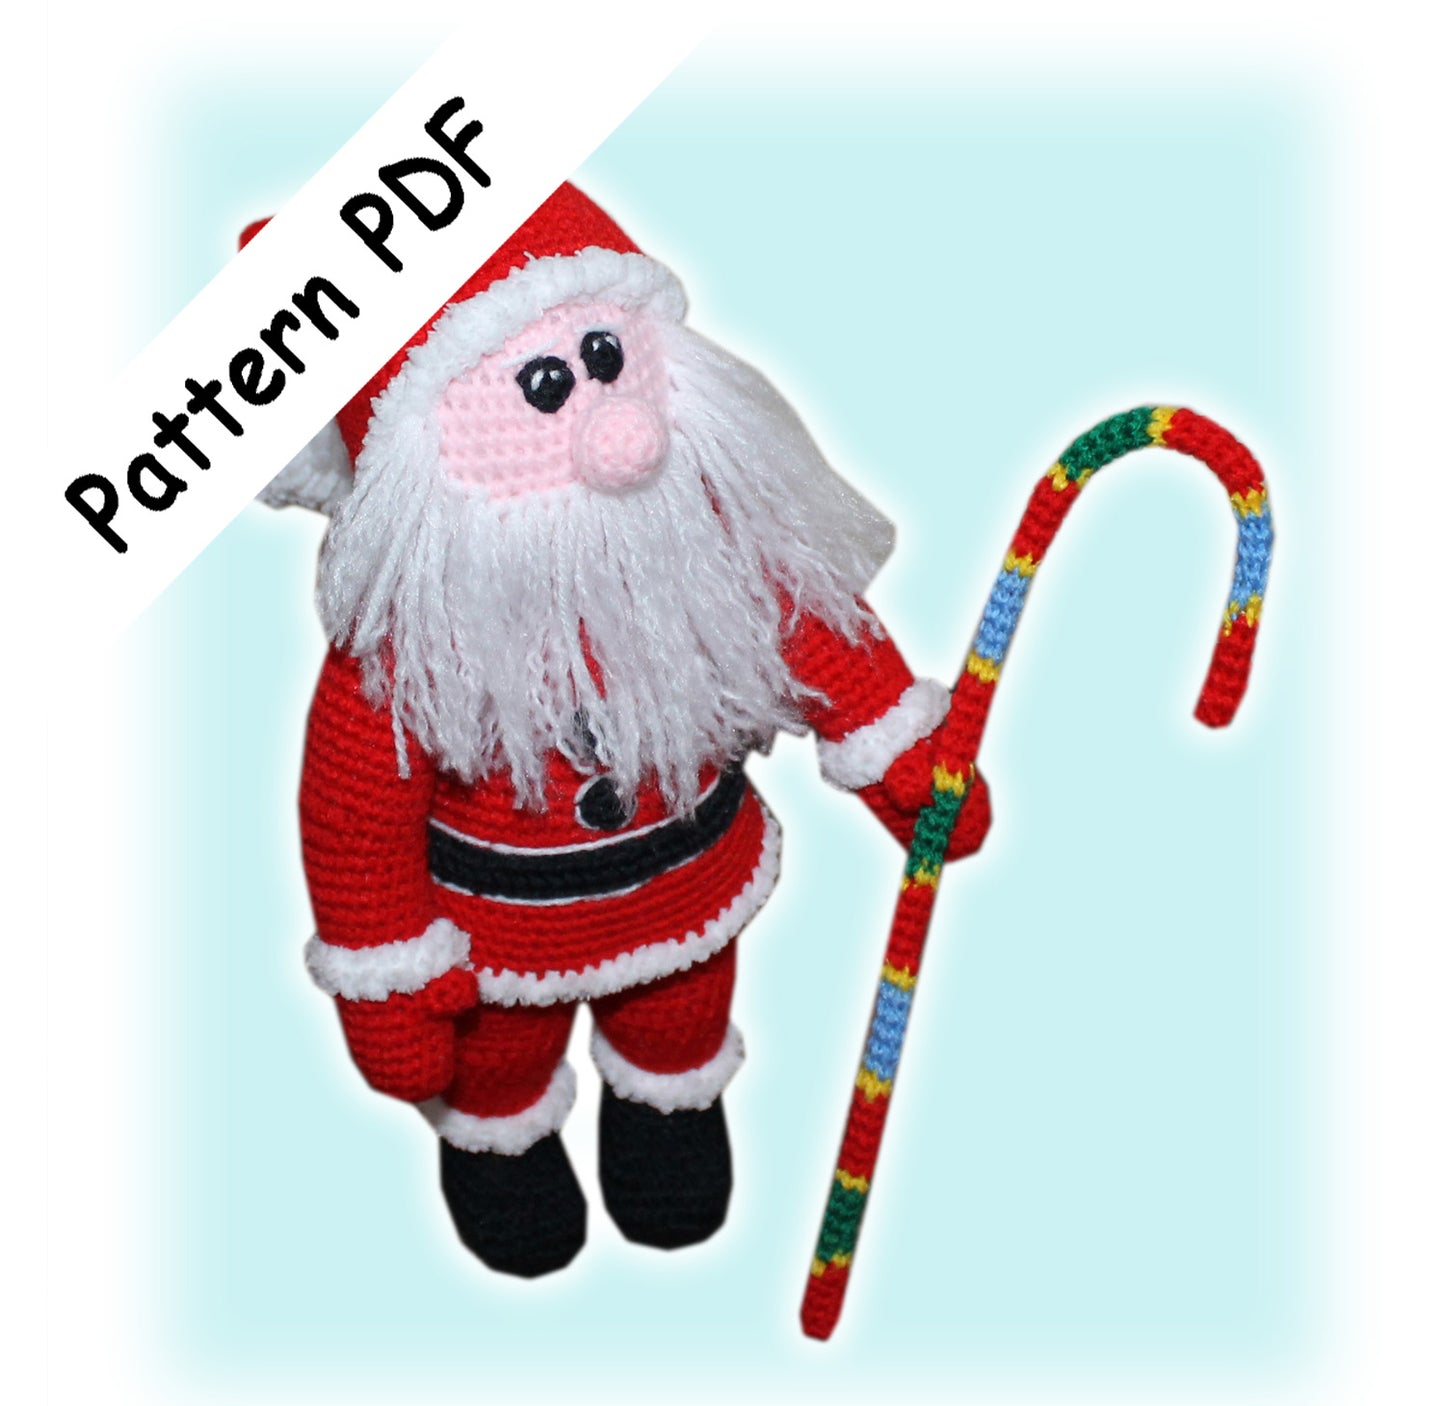 crochet santa claus with cane